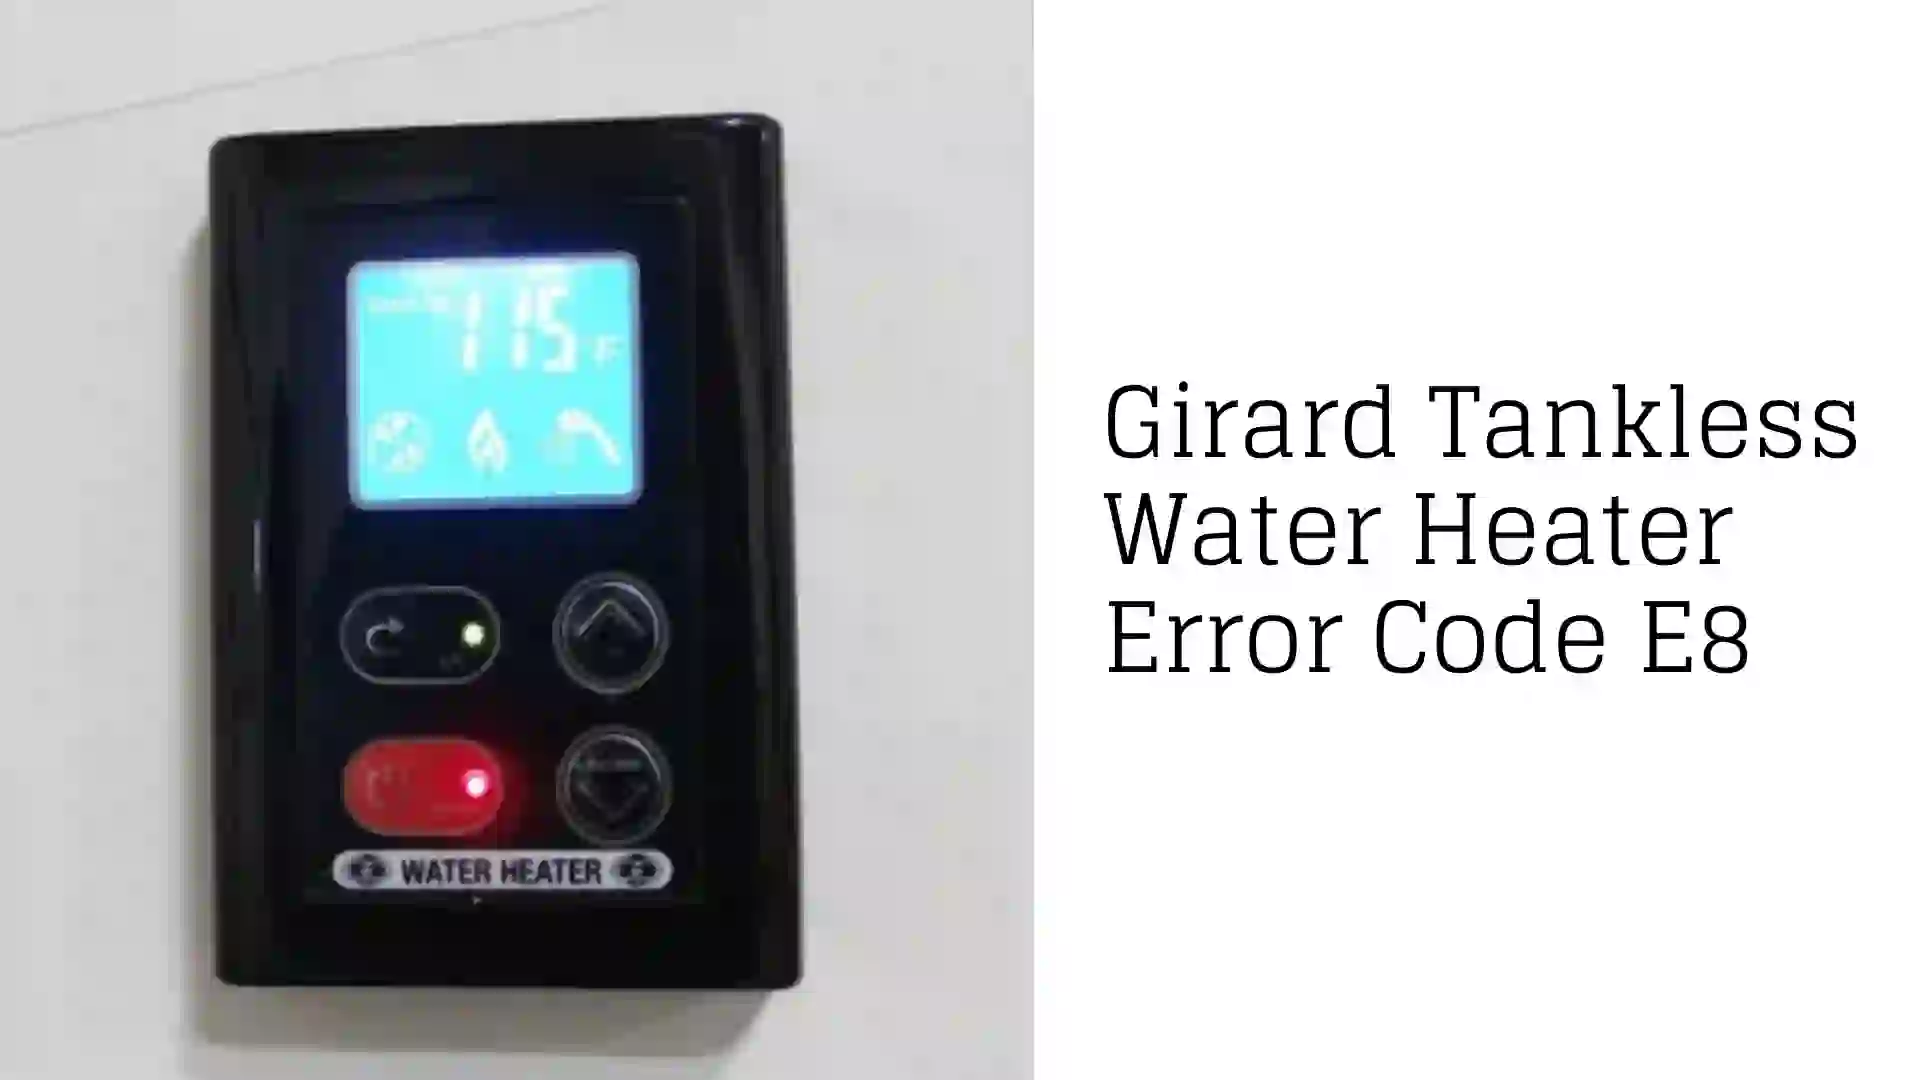 Girard Tankless Water Heater Error Code E8